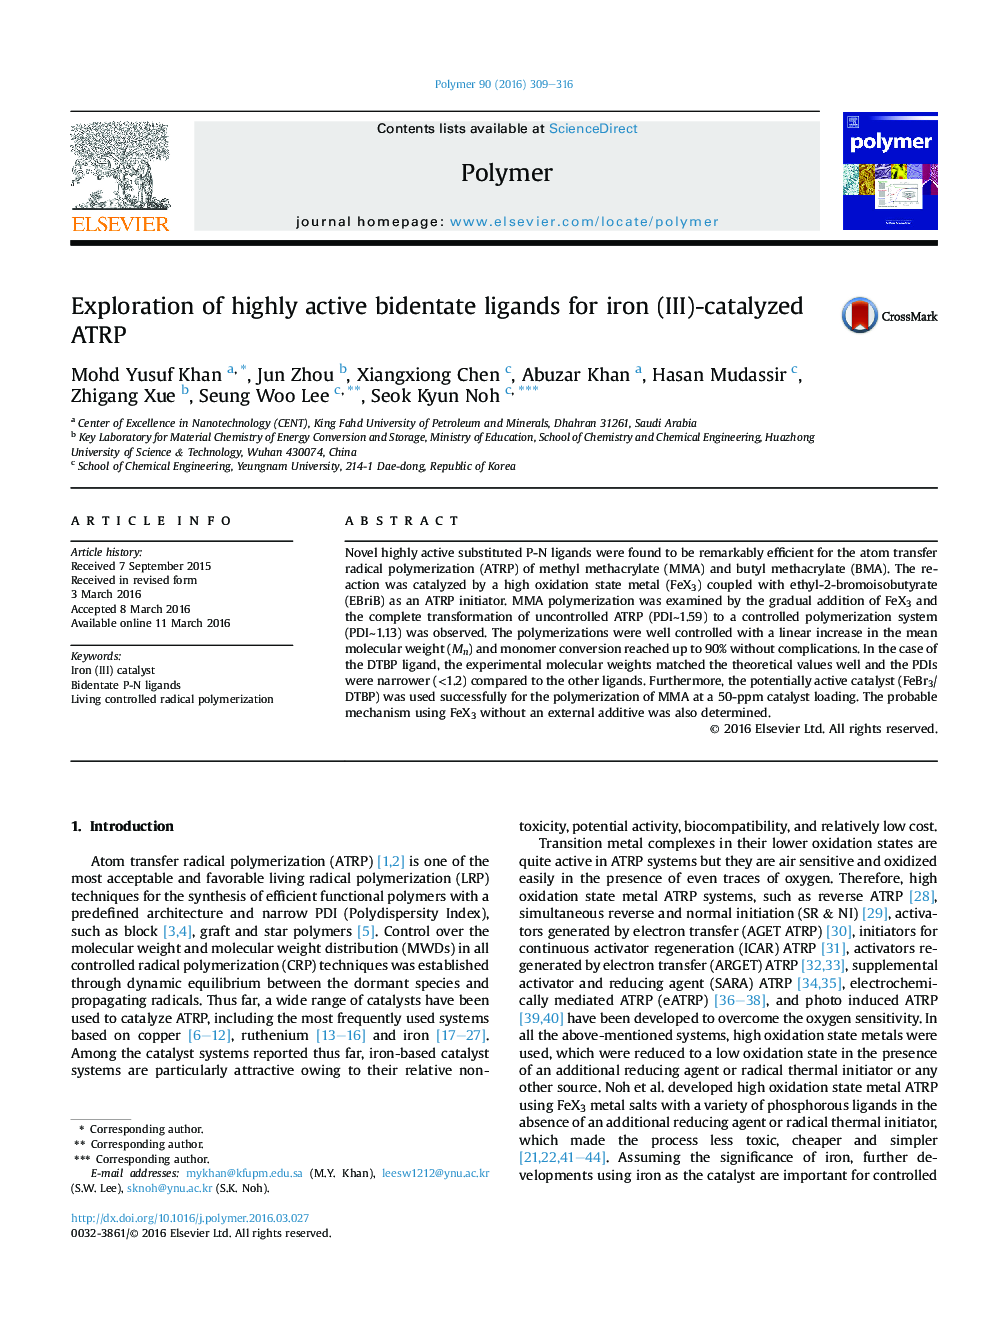 Exploration of highly active bidentate ligands for iron (III)-catalyzed ATRP